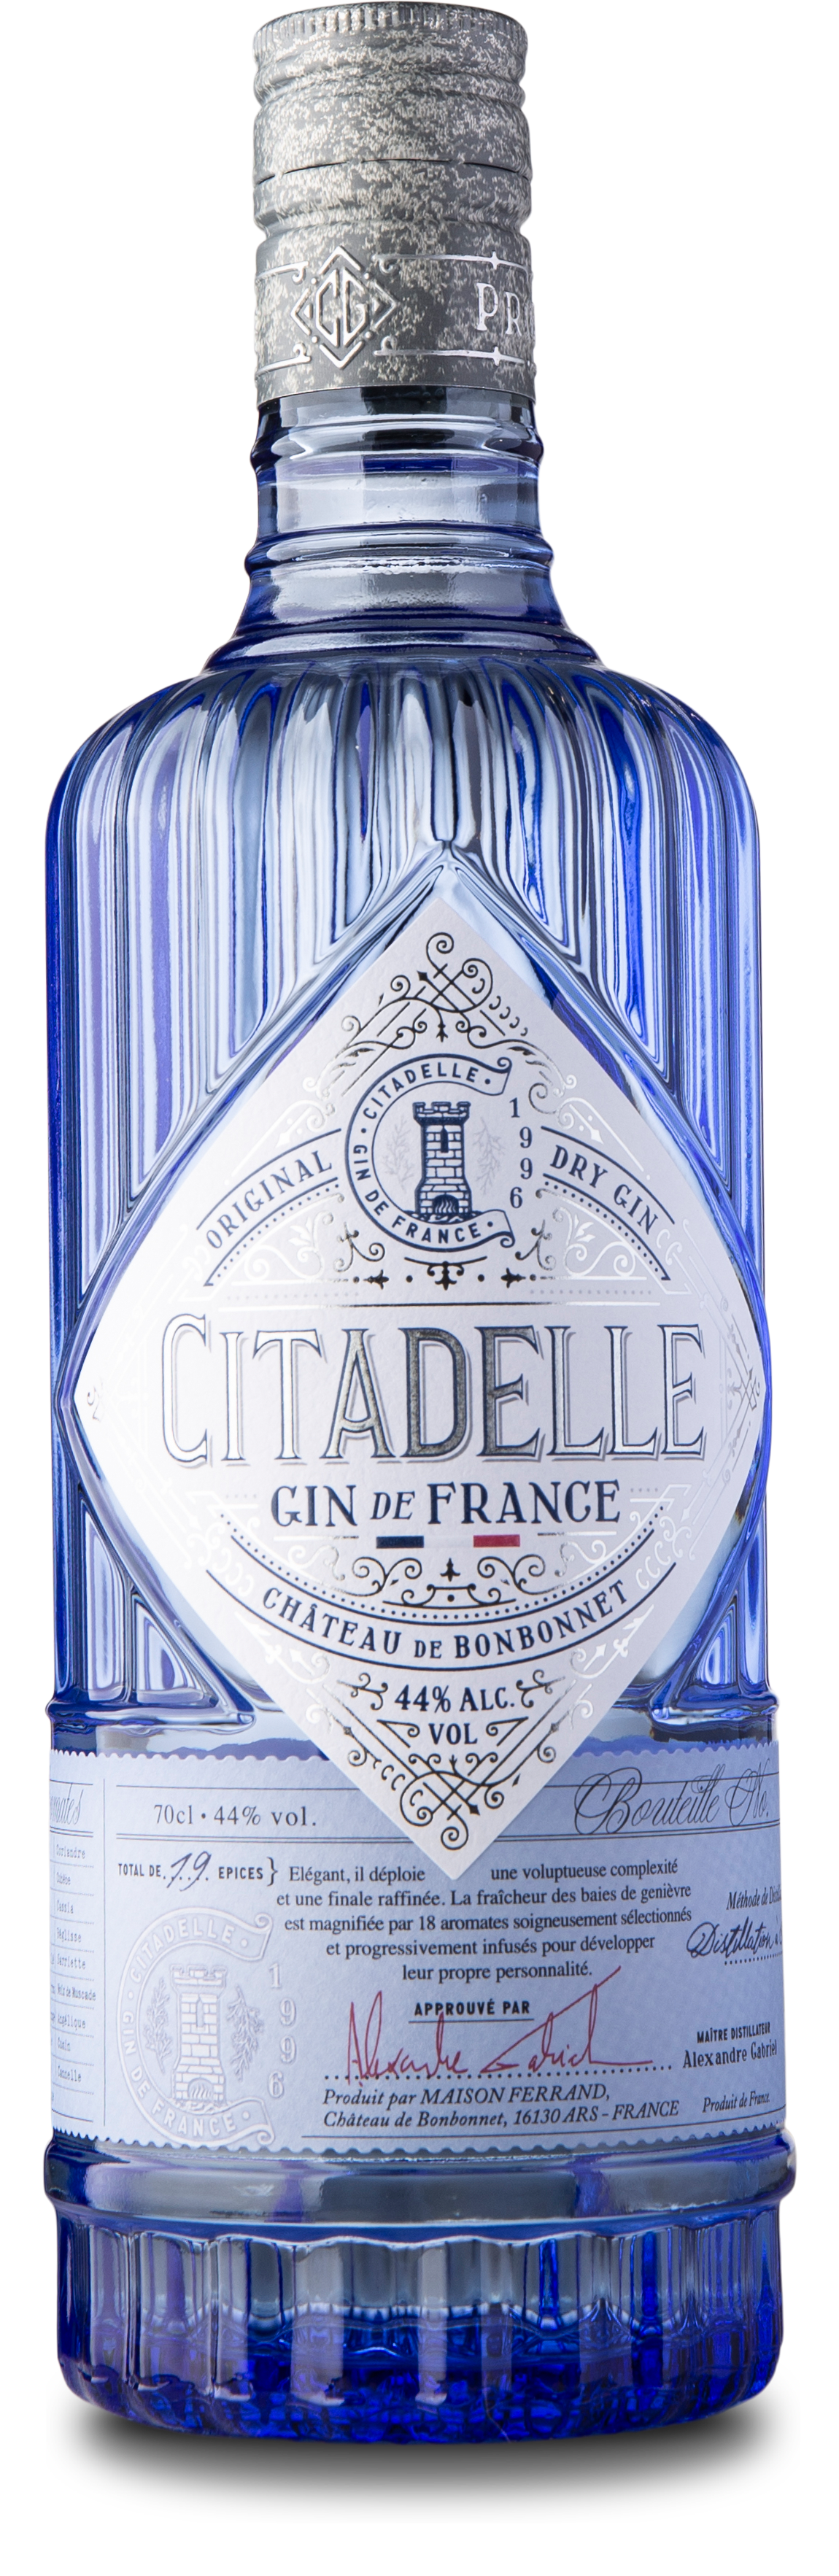 Køb Citadelle Gin 44%, 70 cl, Maison Ferrand her